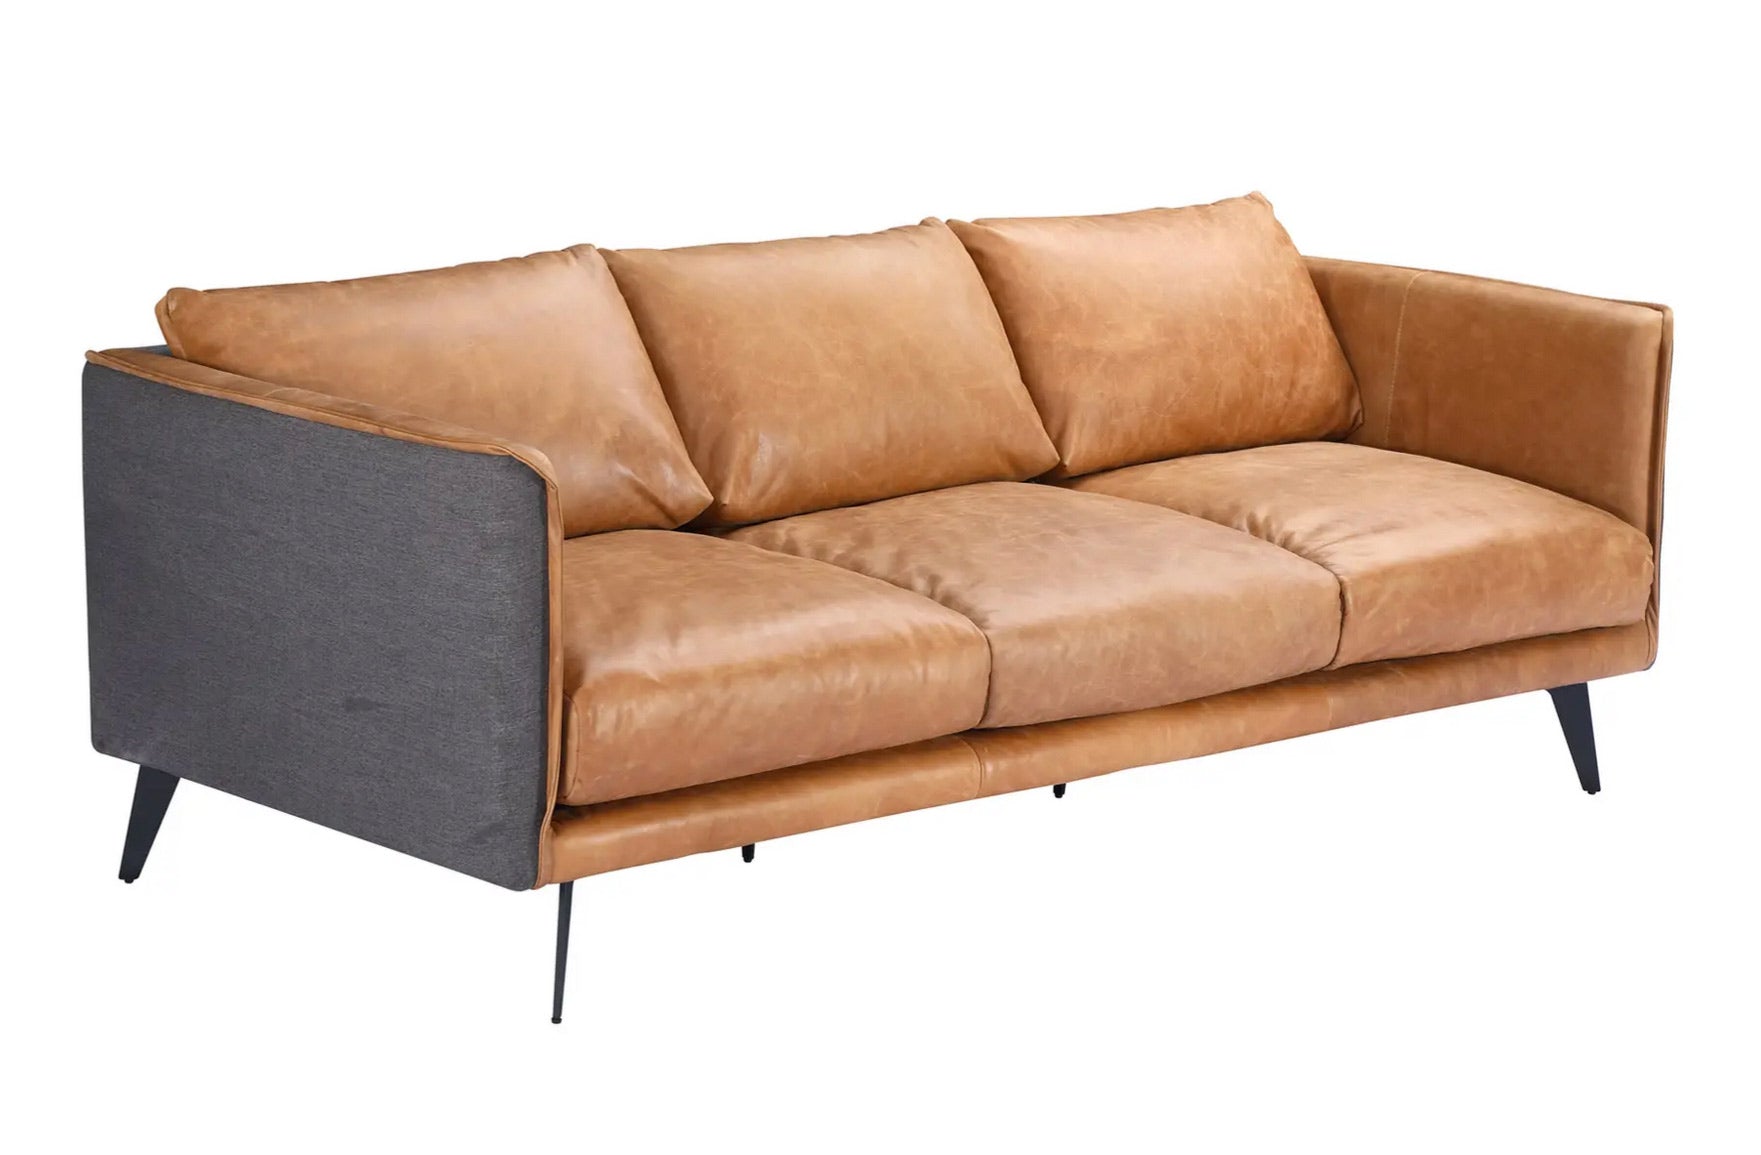 Messino Leather Sofa